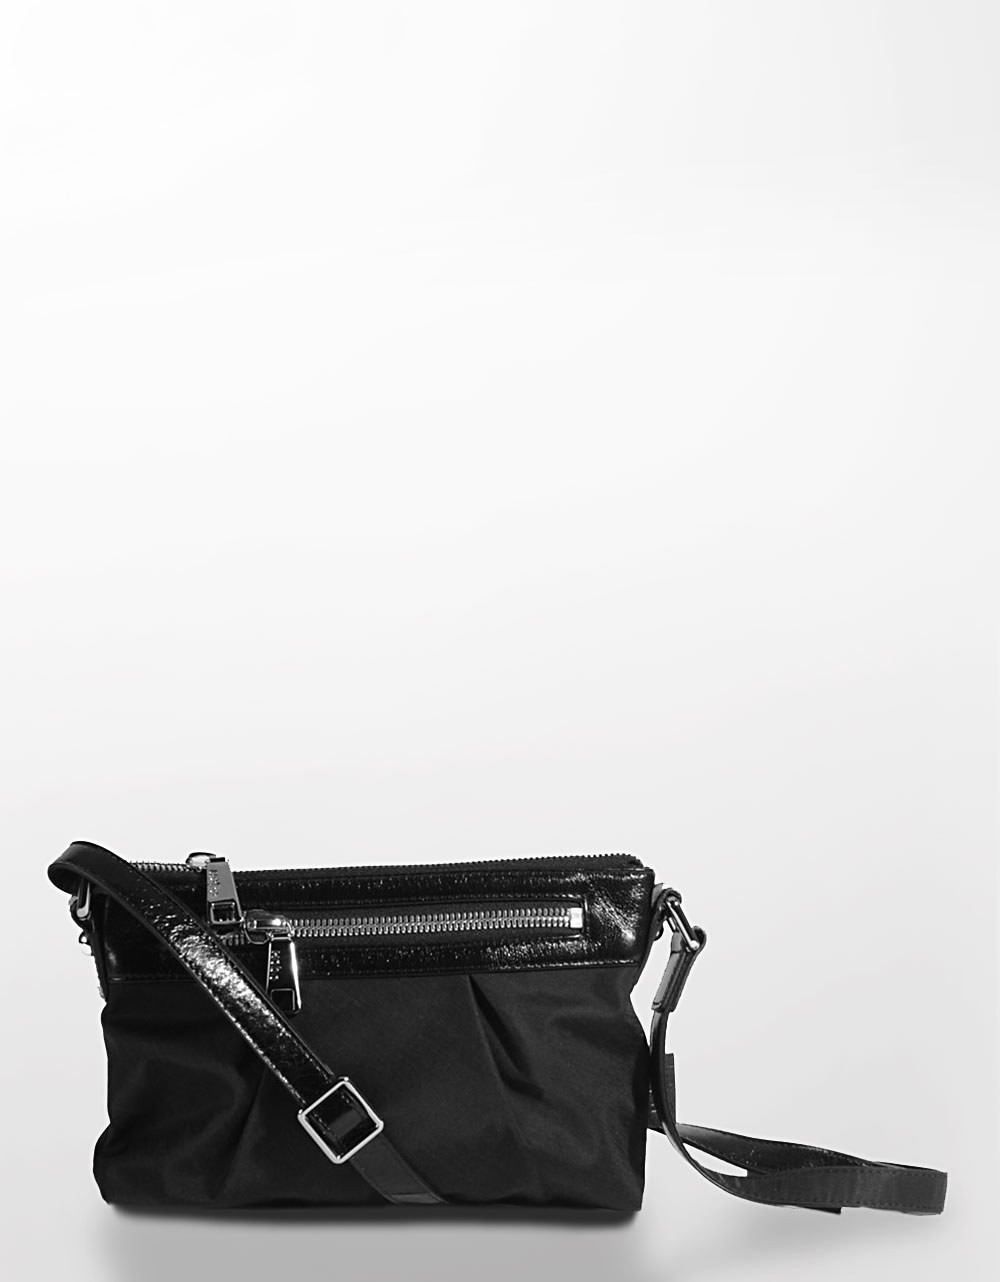 Hobo International Nina Nylon Cross-Body Bag in Black - Lyst